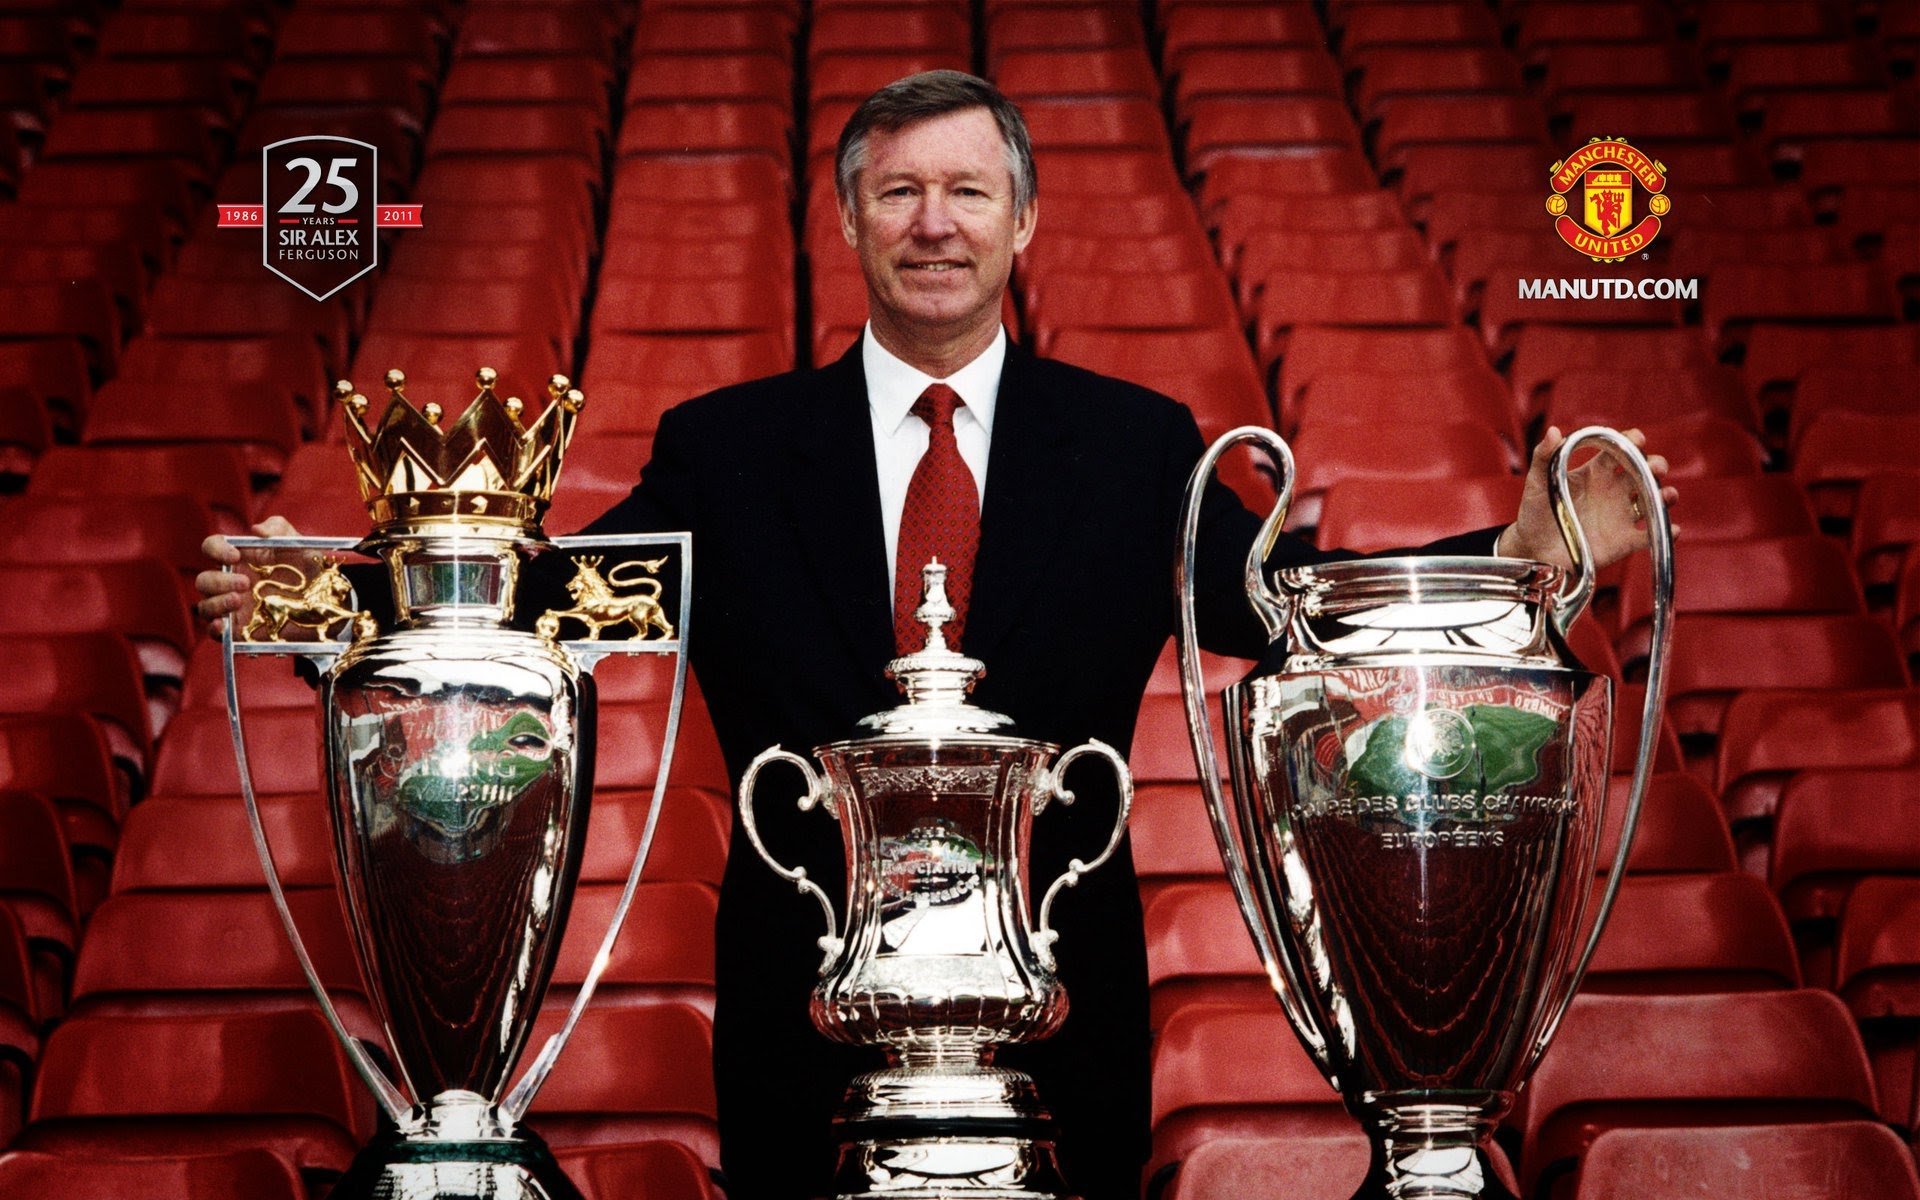 Man Utd Channel on X: "Sir Alex Ferguson. English treble winner.  https://t.co/NL0PQ7BacB" / X